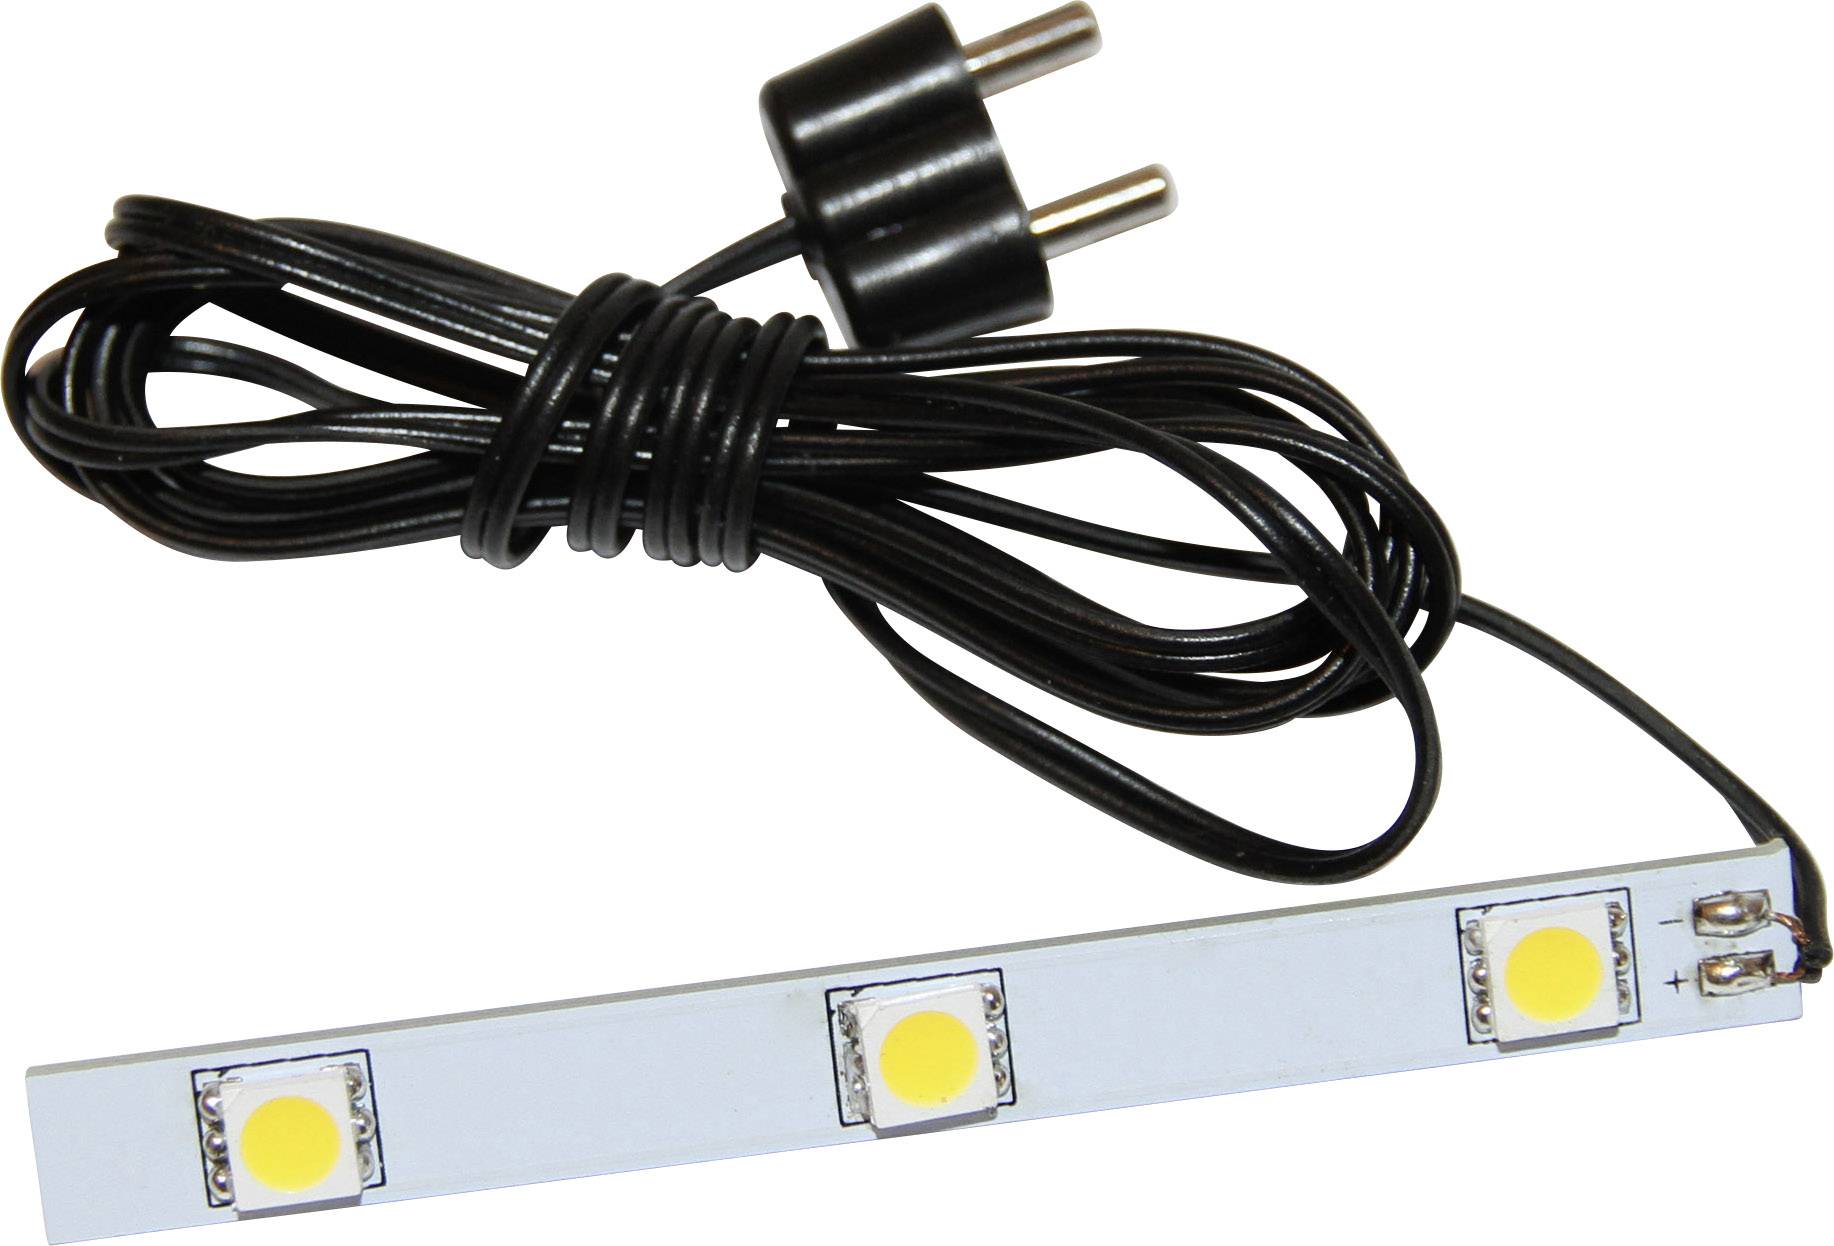 Kahlert 69911 Licht LED-Leiste mit Batterie-Box 3.5 V  weiß  NEU/OVP 